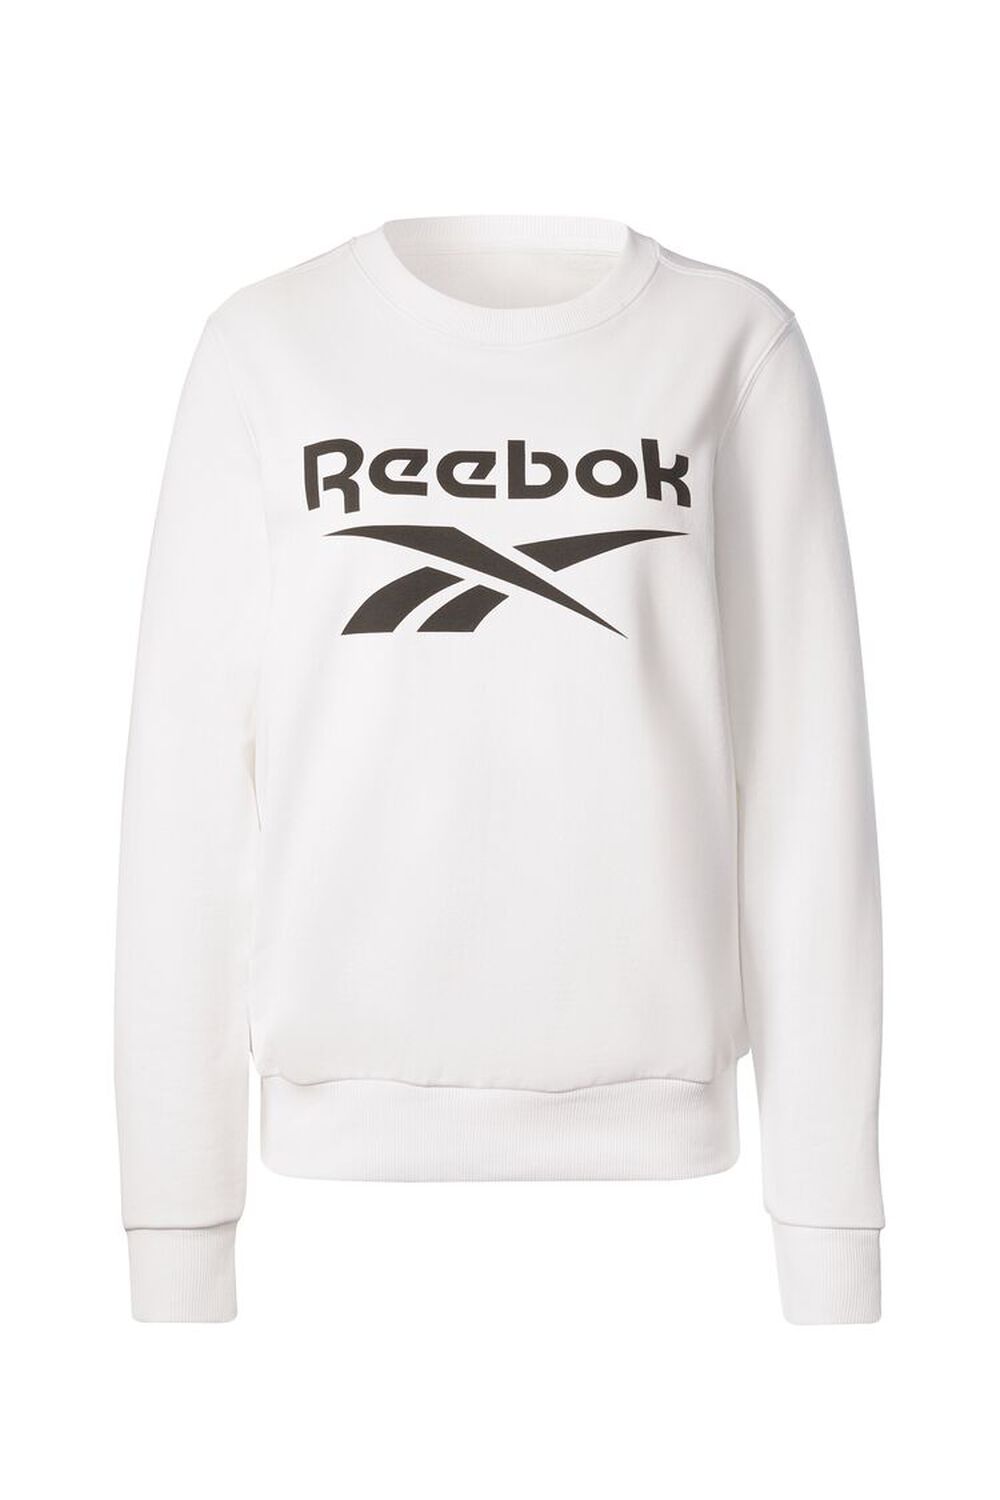 Reebok Identity Logo French Crew Sweatshirt